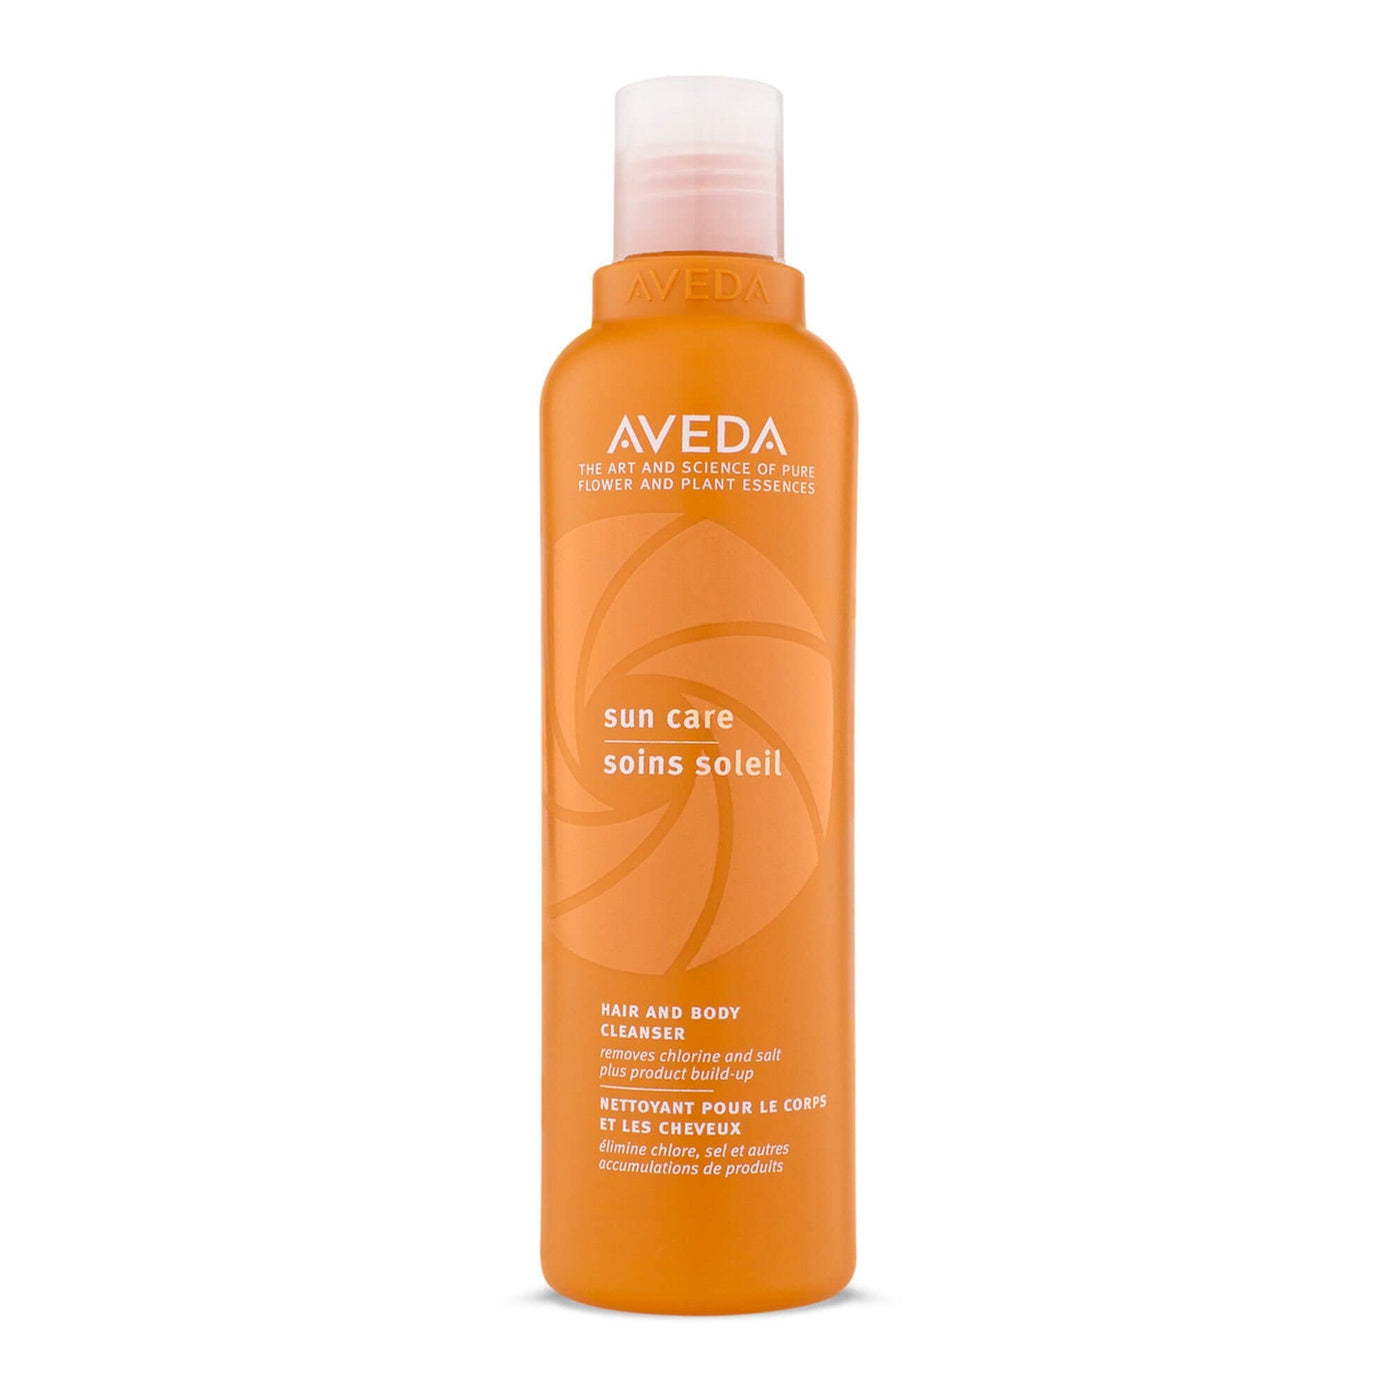 Aveda Shampoo Sun care hair and body cleanser 250ml